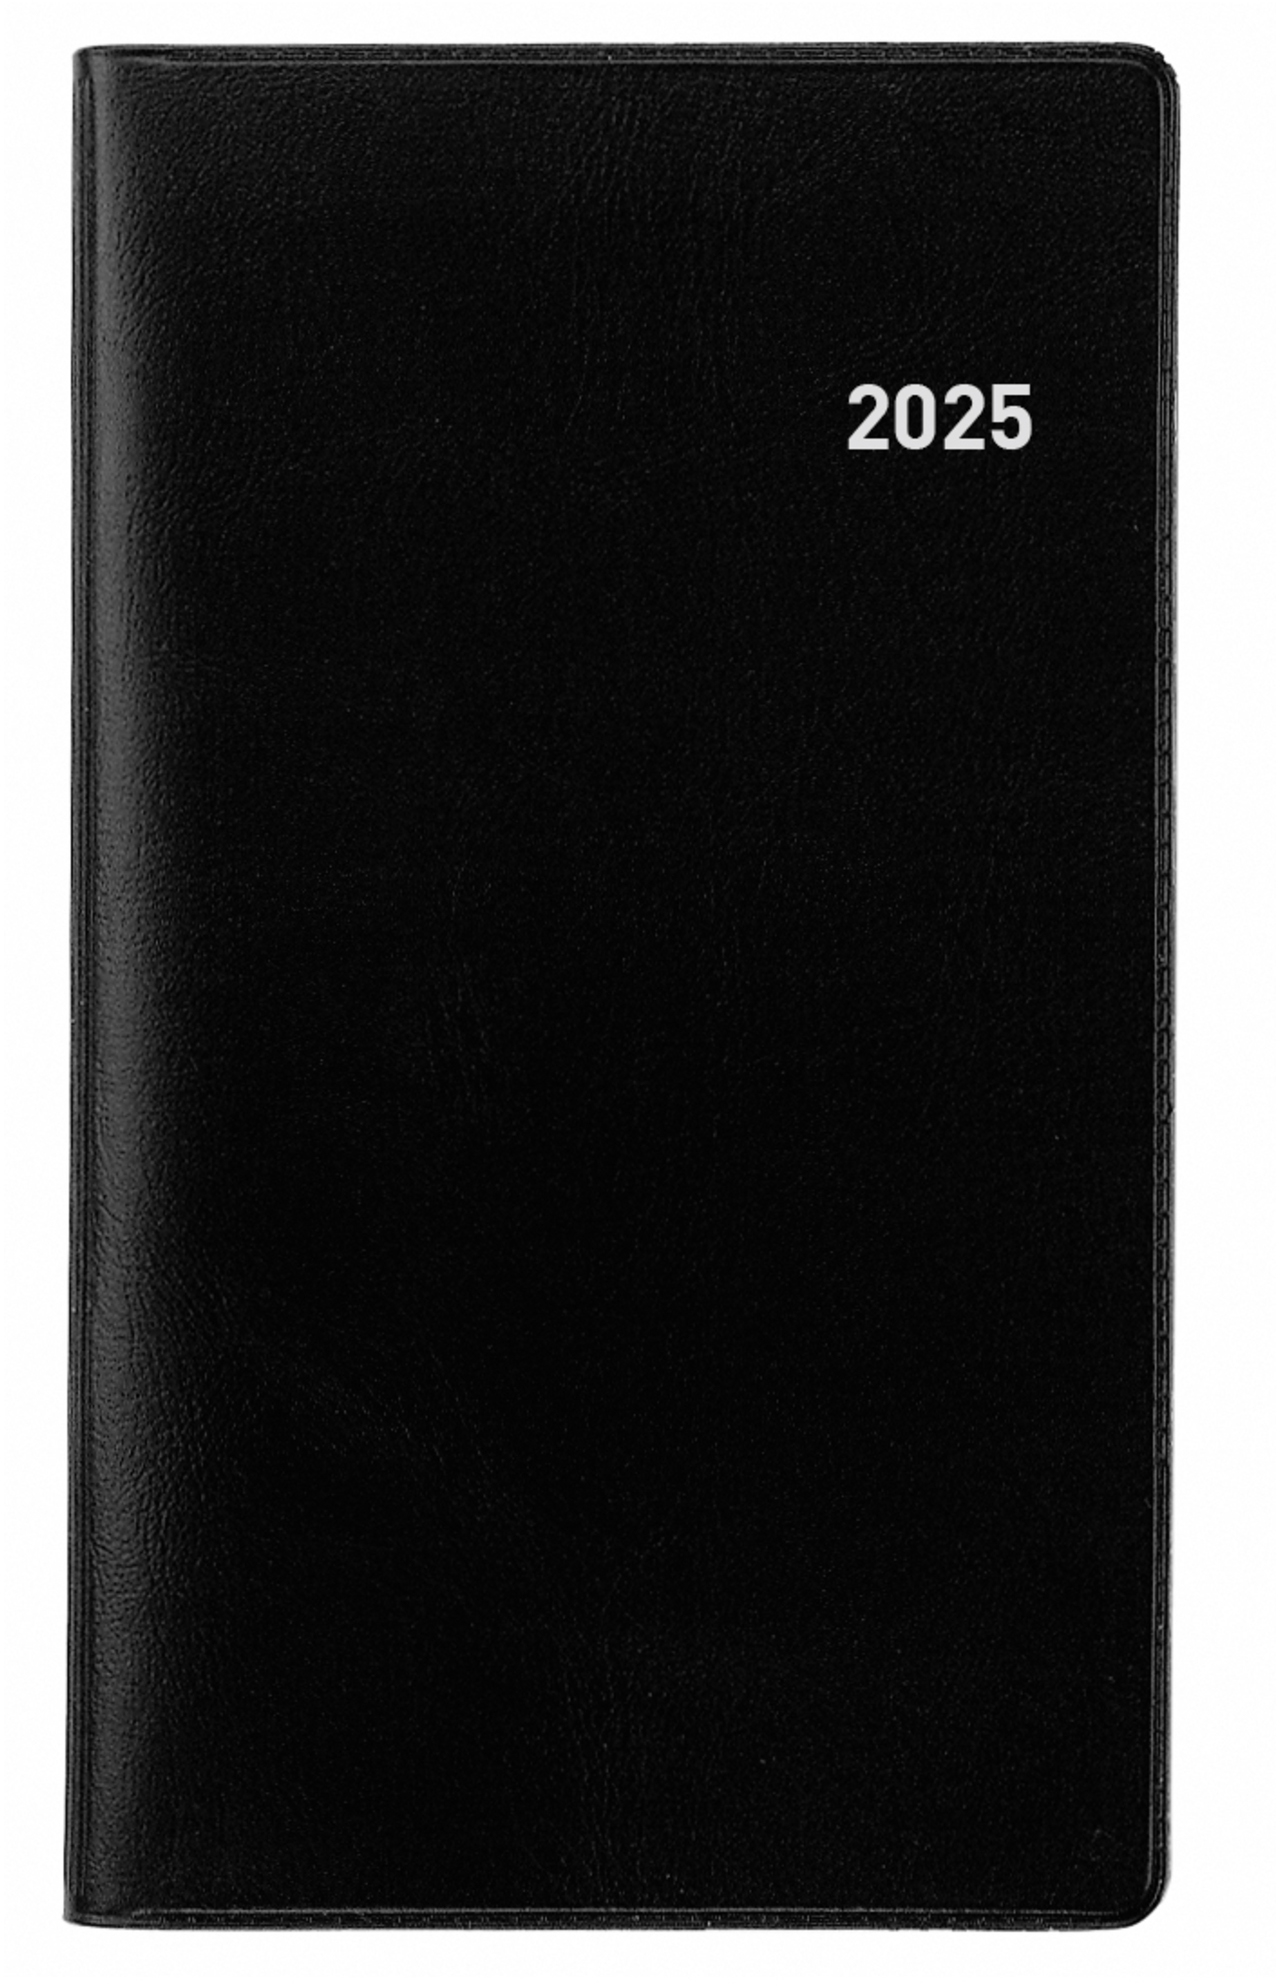 BIELLA Agenda Berlin 2025 851561020025 1M/1P noir ML 8.7x15.3cm